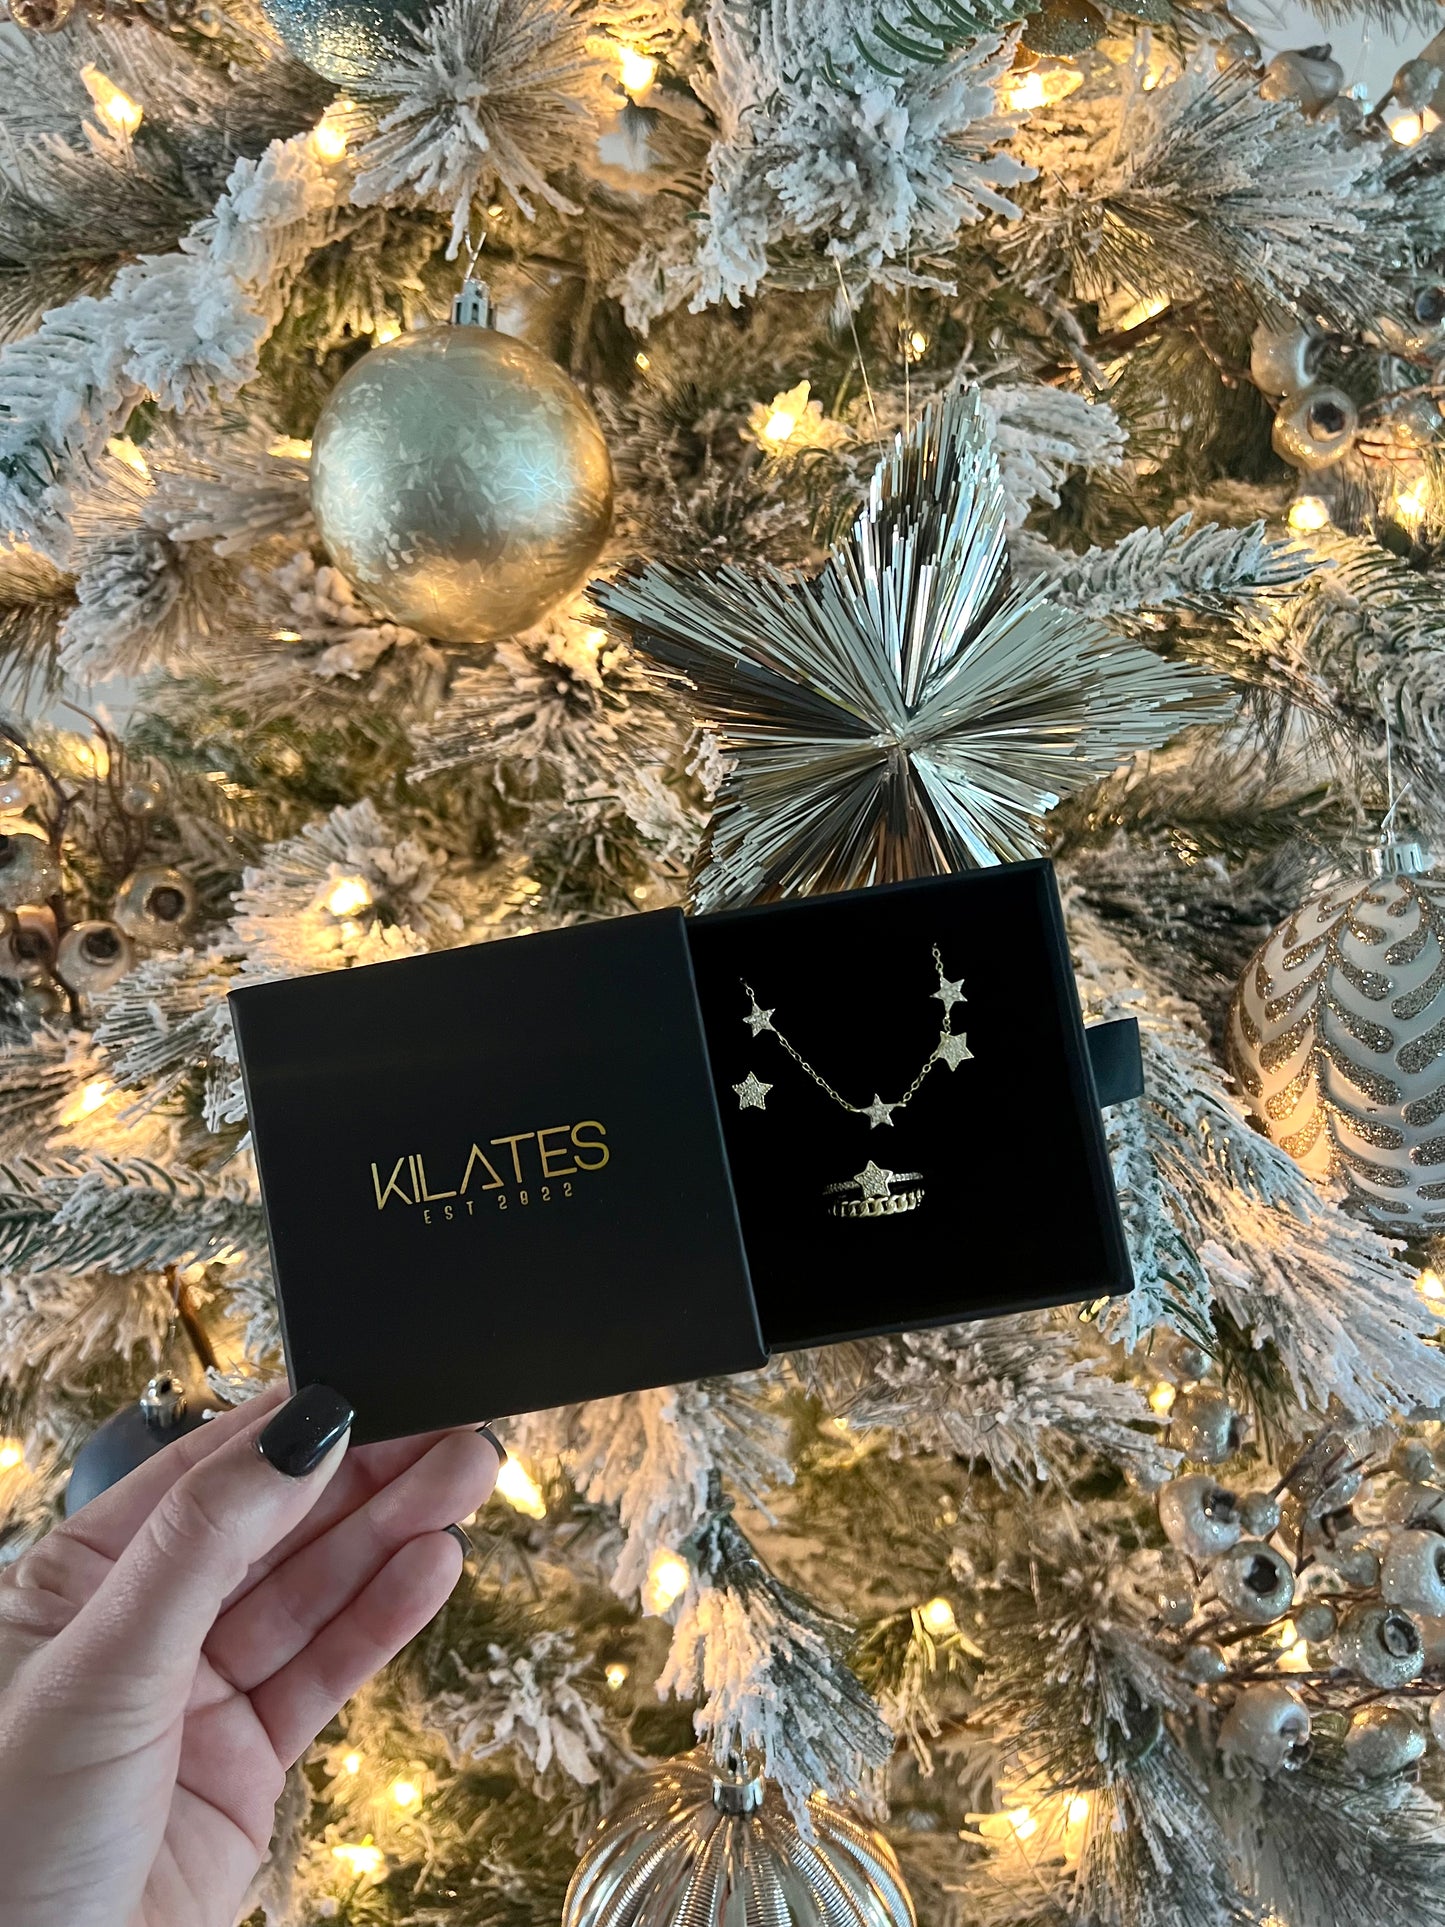 Kilates Gift Box